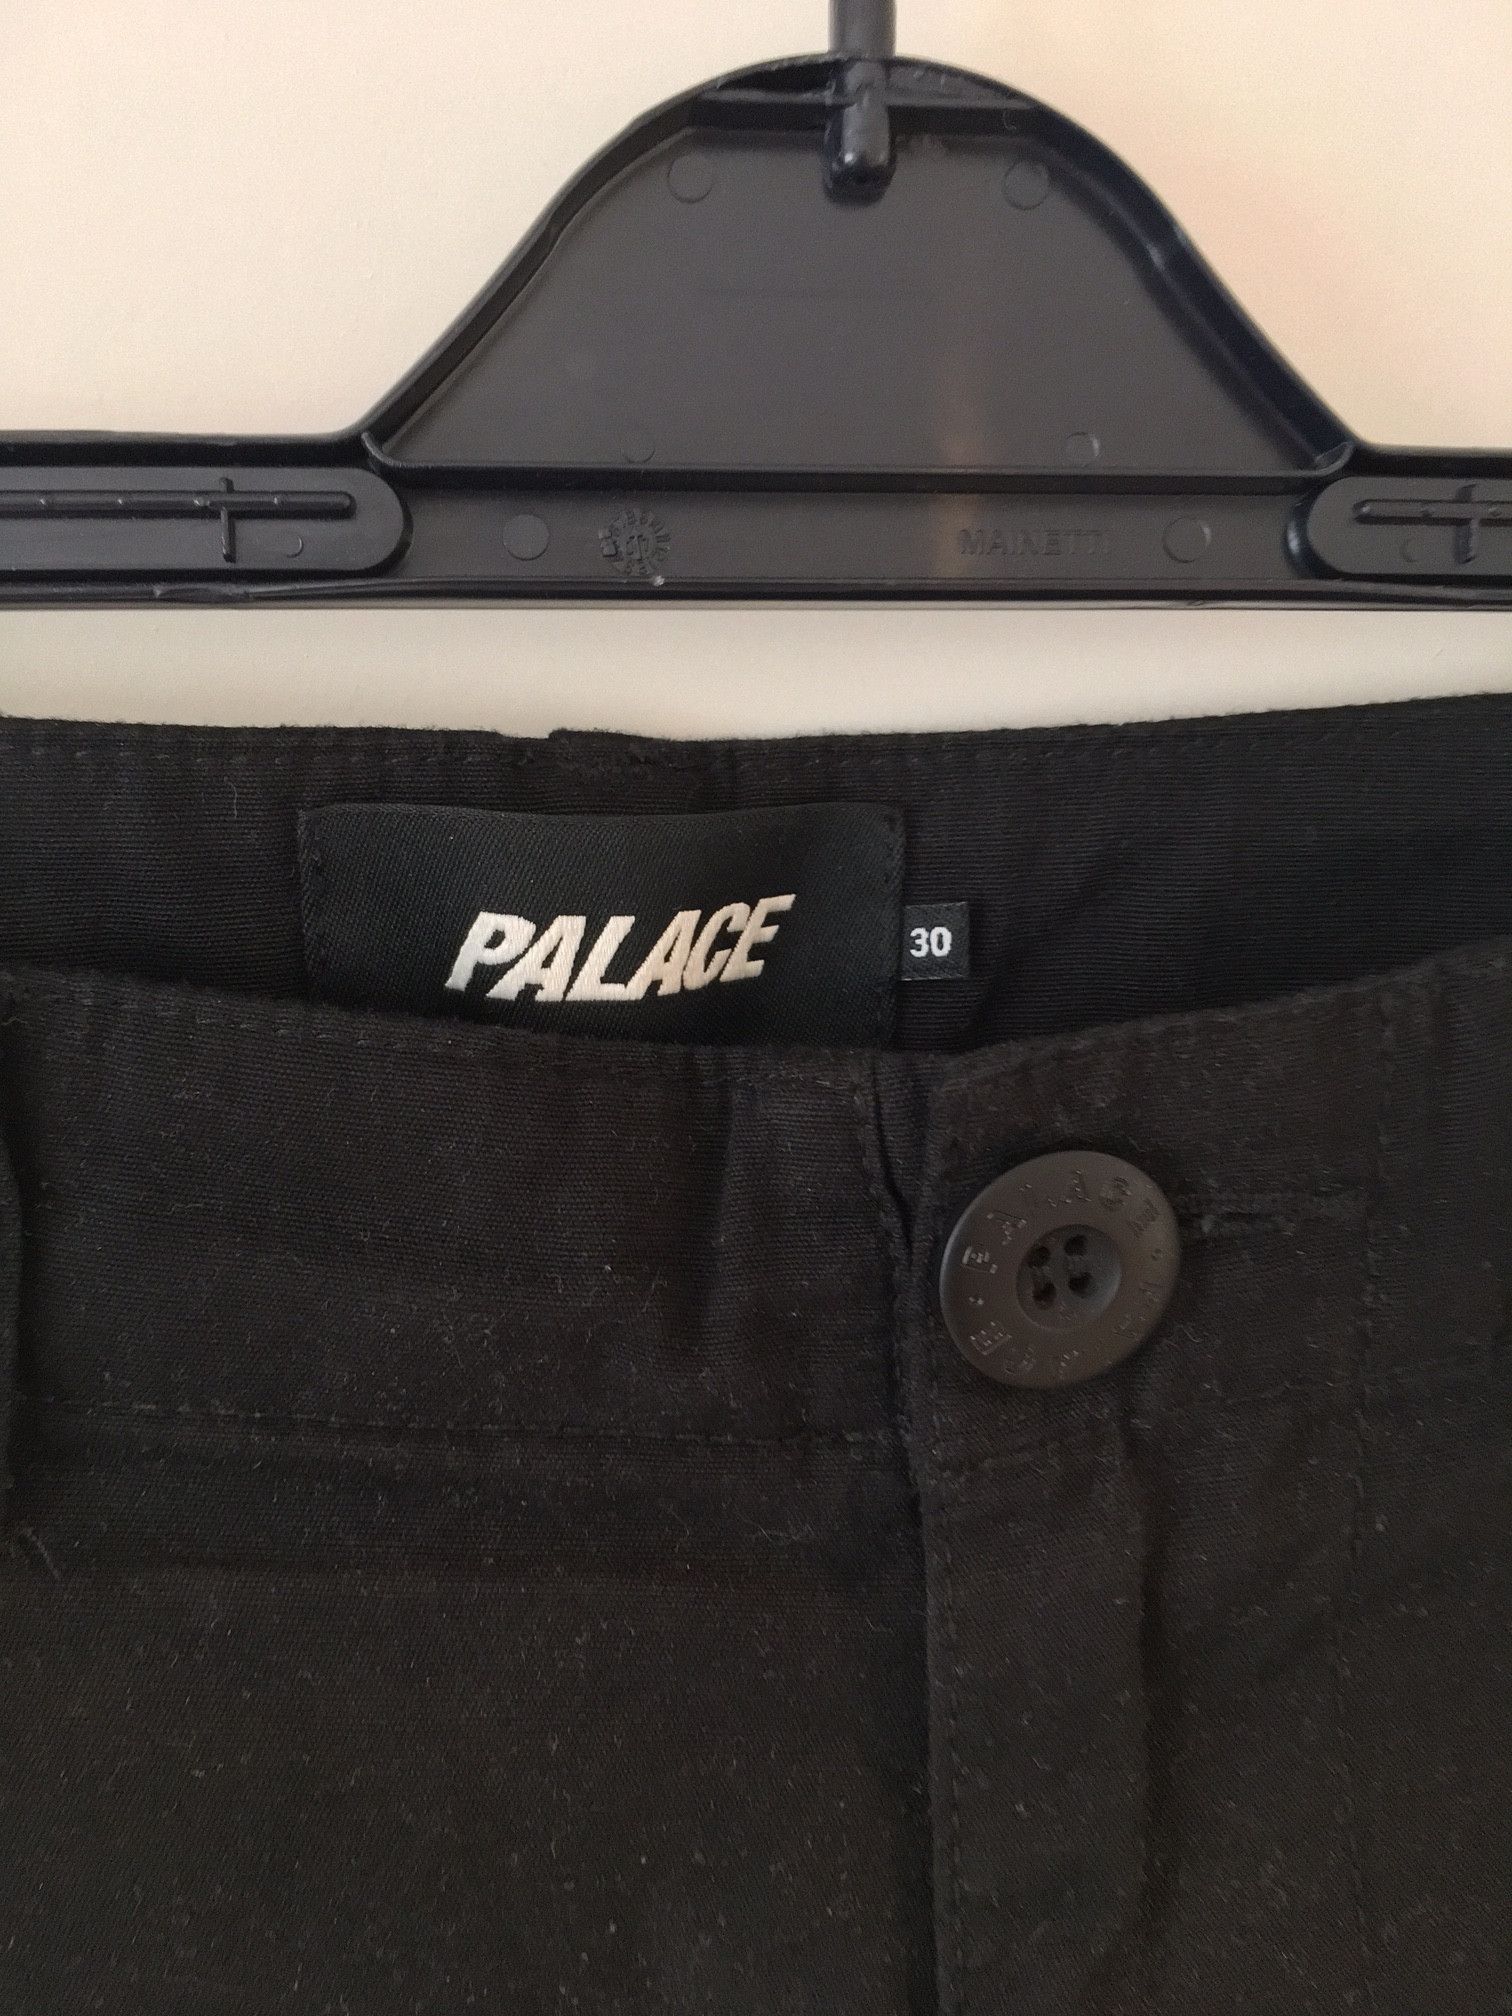 Palace palace cargo pants Size US 30 / EU 46 - 2 Preview